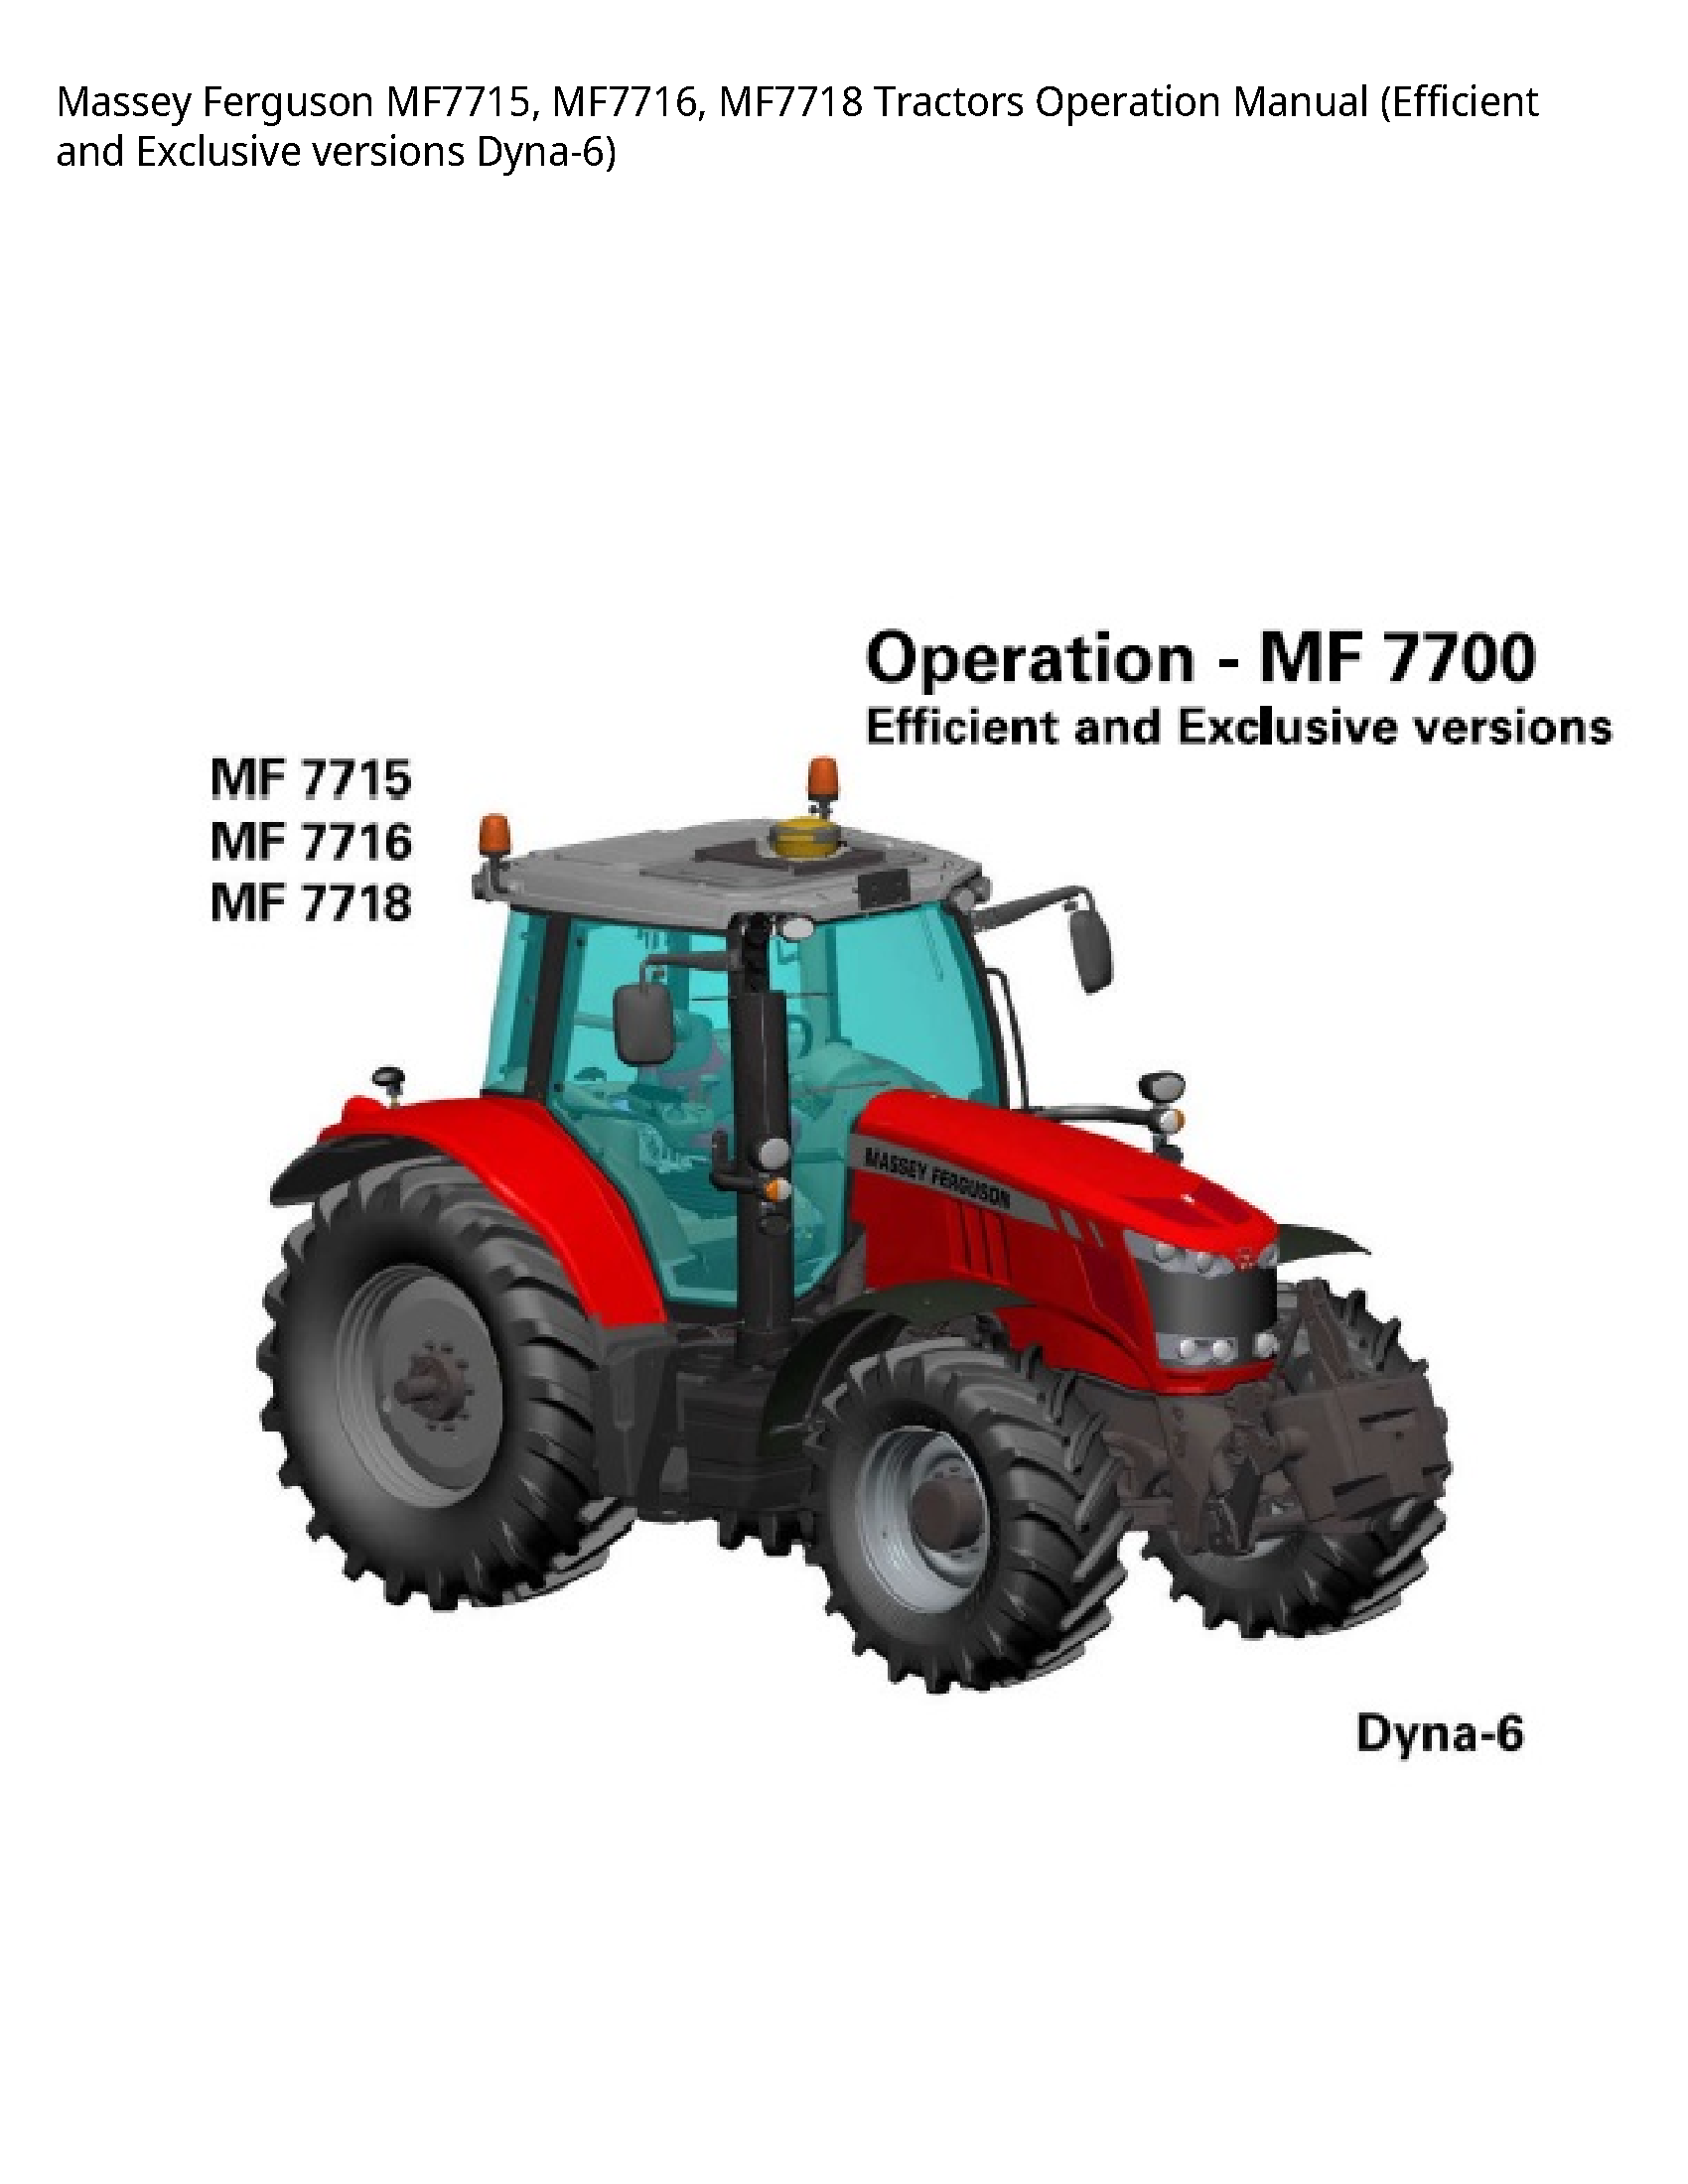 Massey Ferguson MF7715 Tractors Operation manual